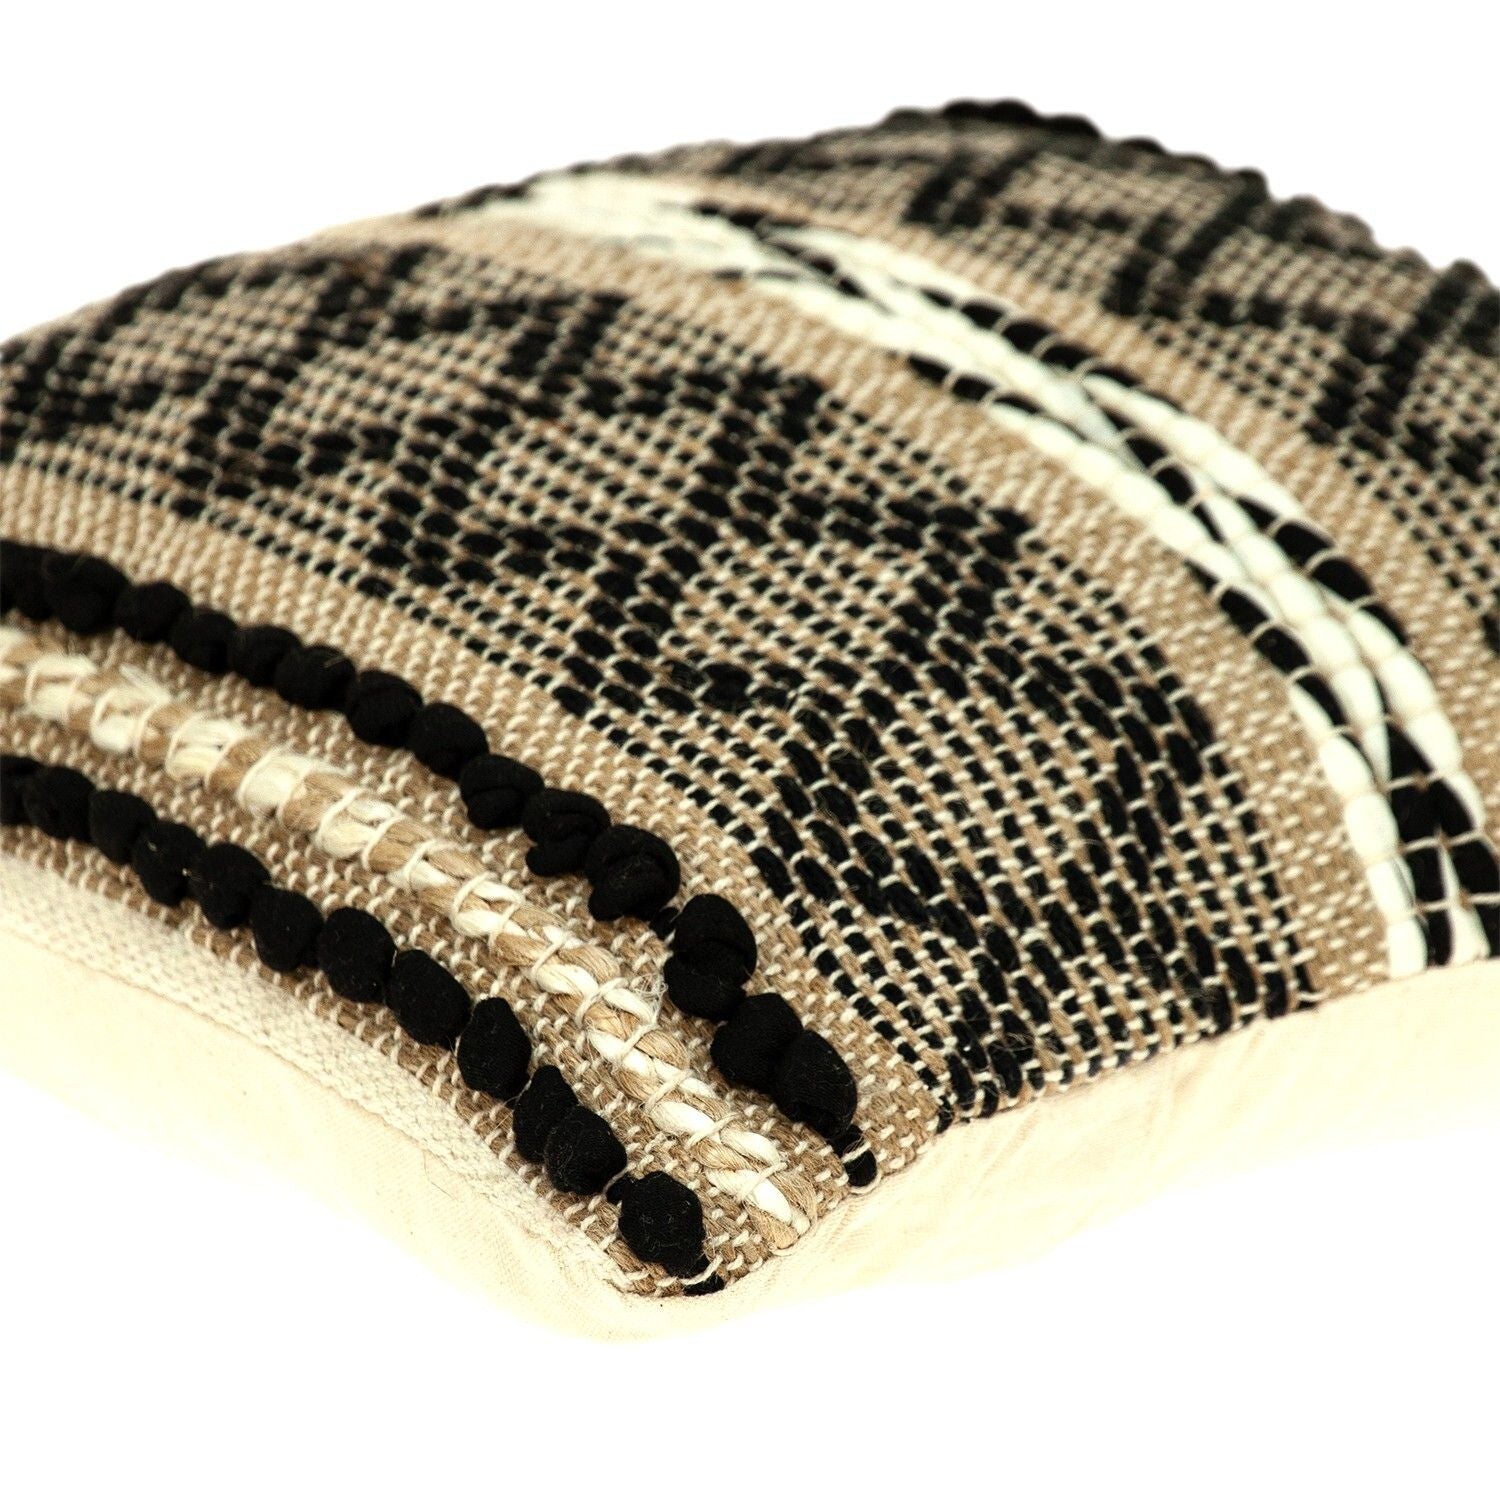 Black and Sand Woven Decorative Pillow - Team Spirit Store USA 